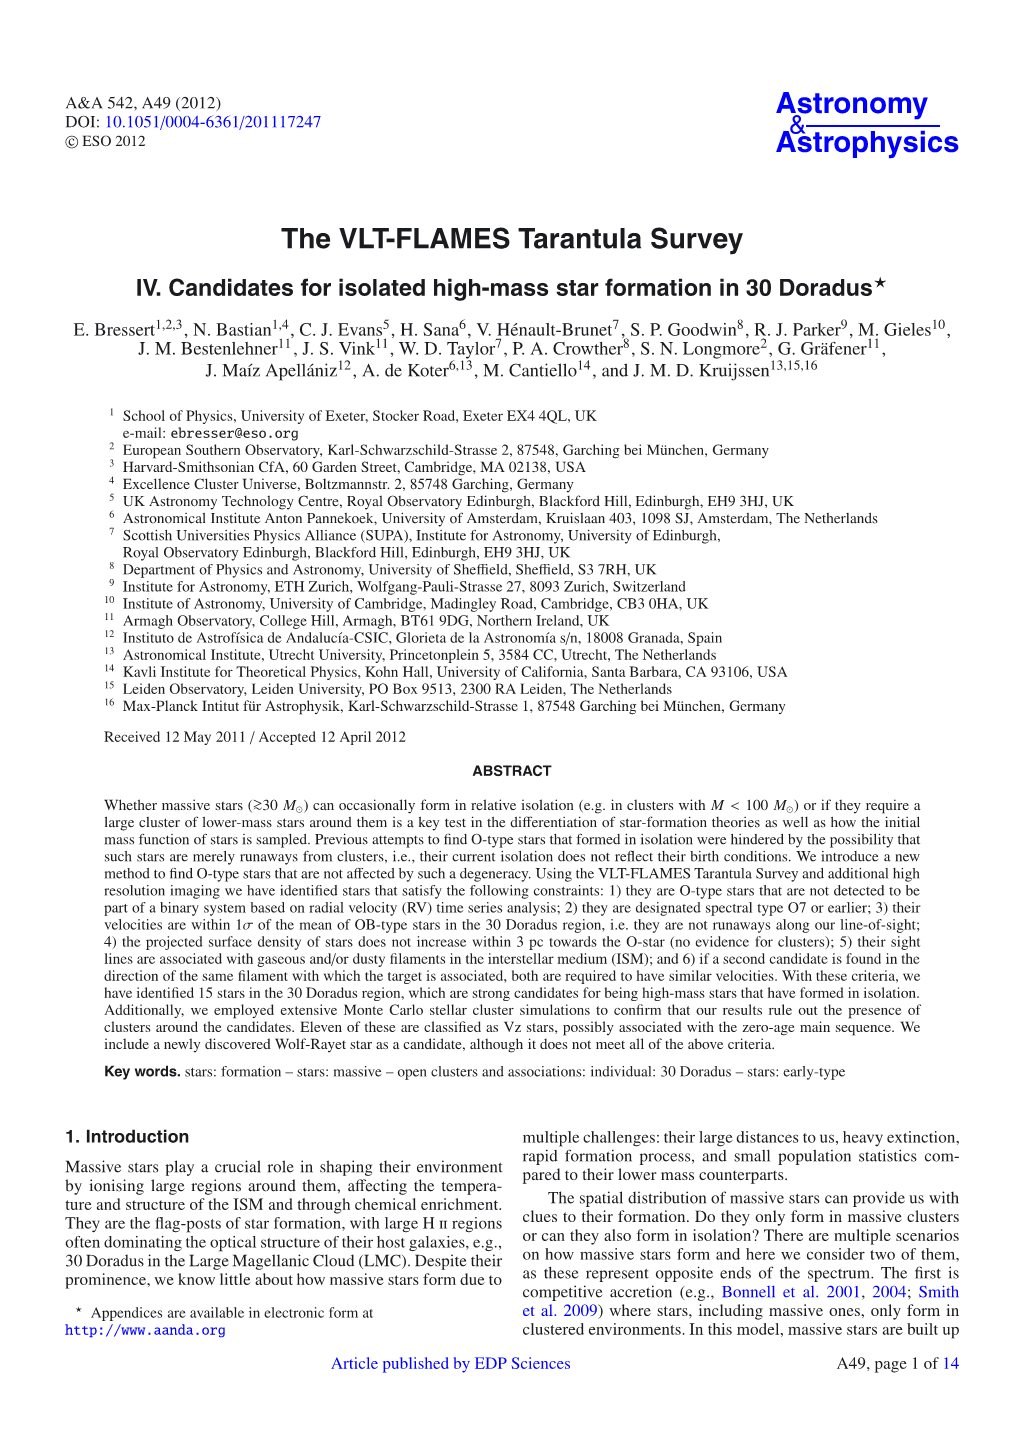 The VLT-FLAMES Tarantula Survey IV